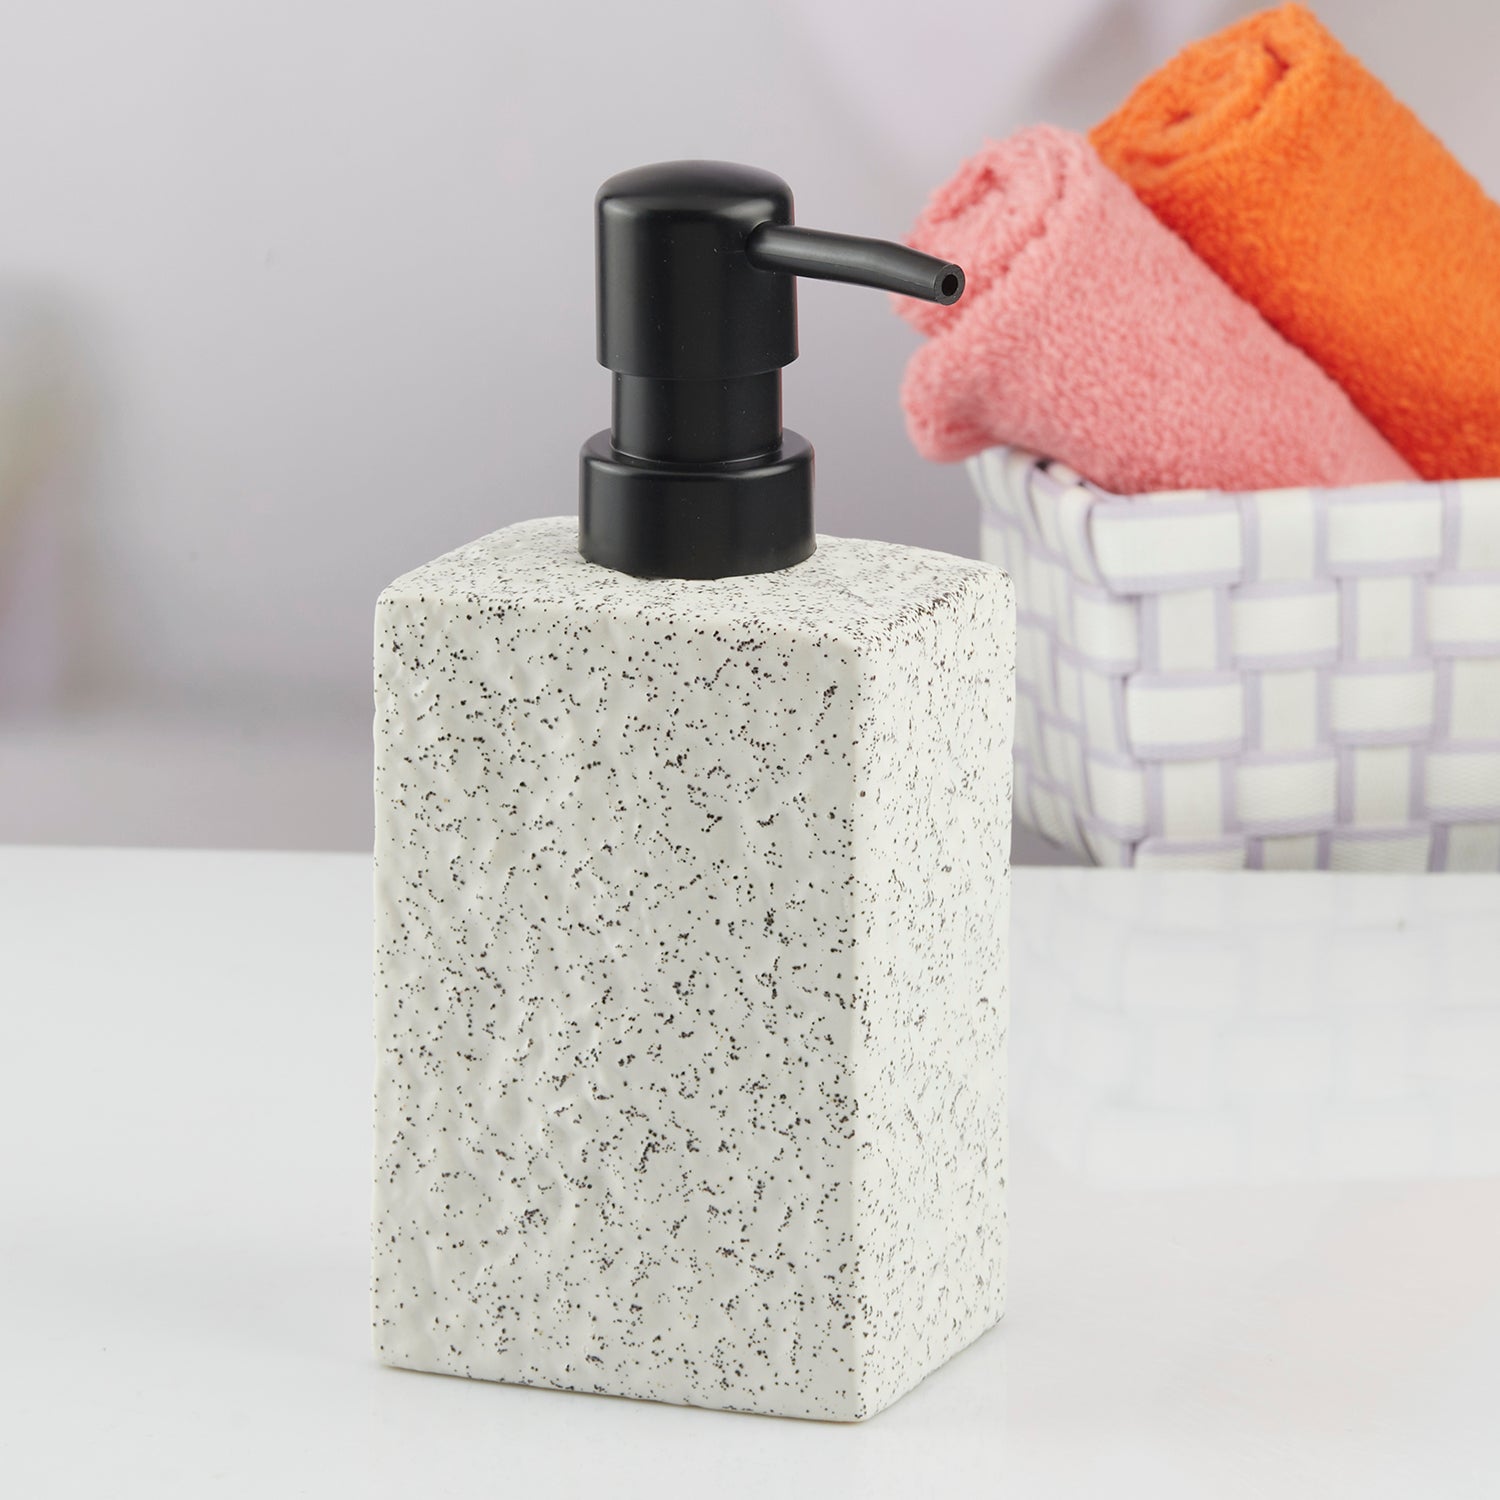 Kookee Ceramic Soap Dispenser for Bathroom handwash, refillable pump bottle for Kitchen hand wash basin, Set of 1, White (10621)